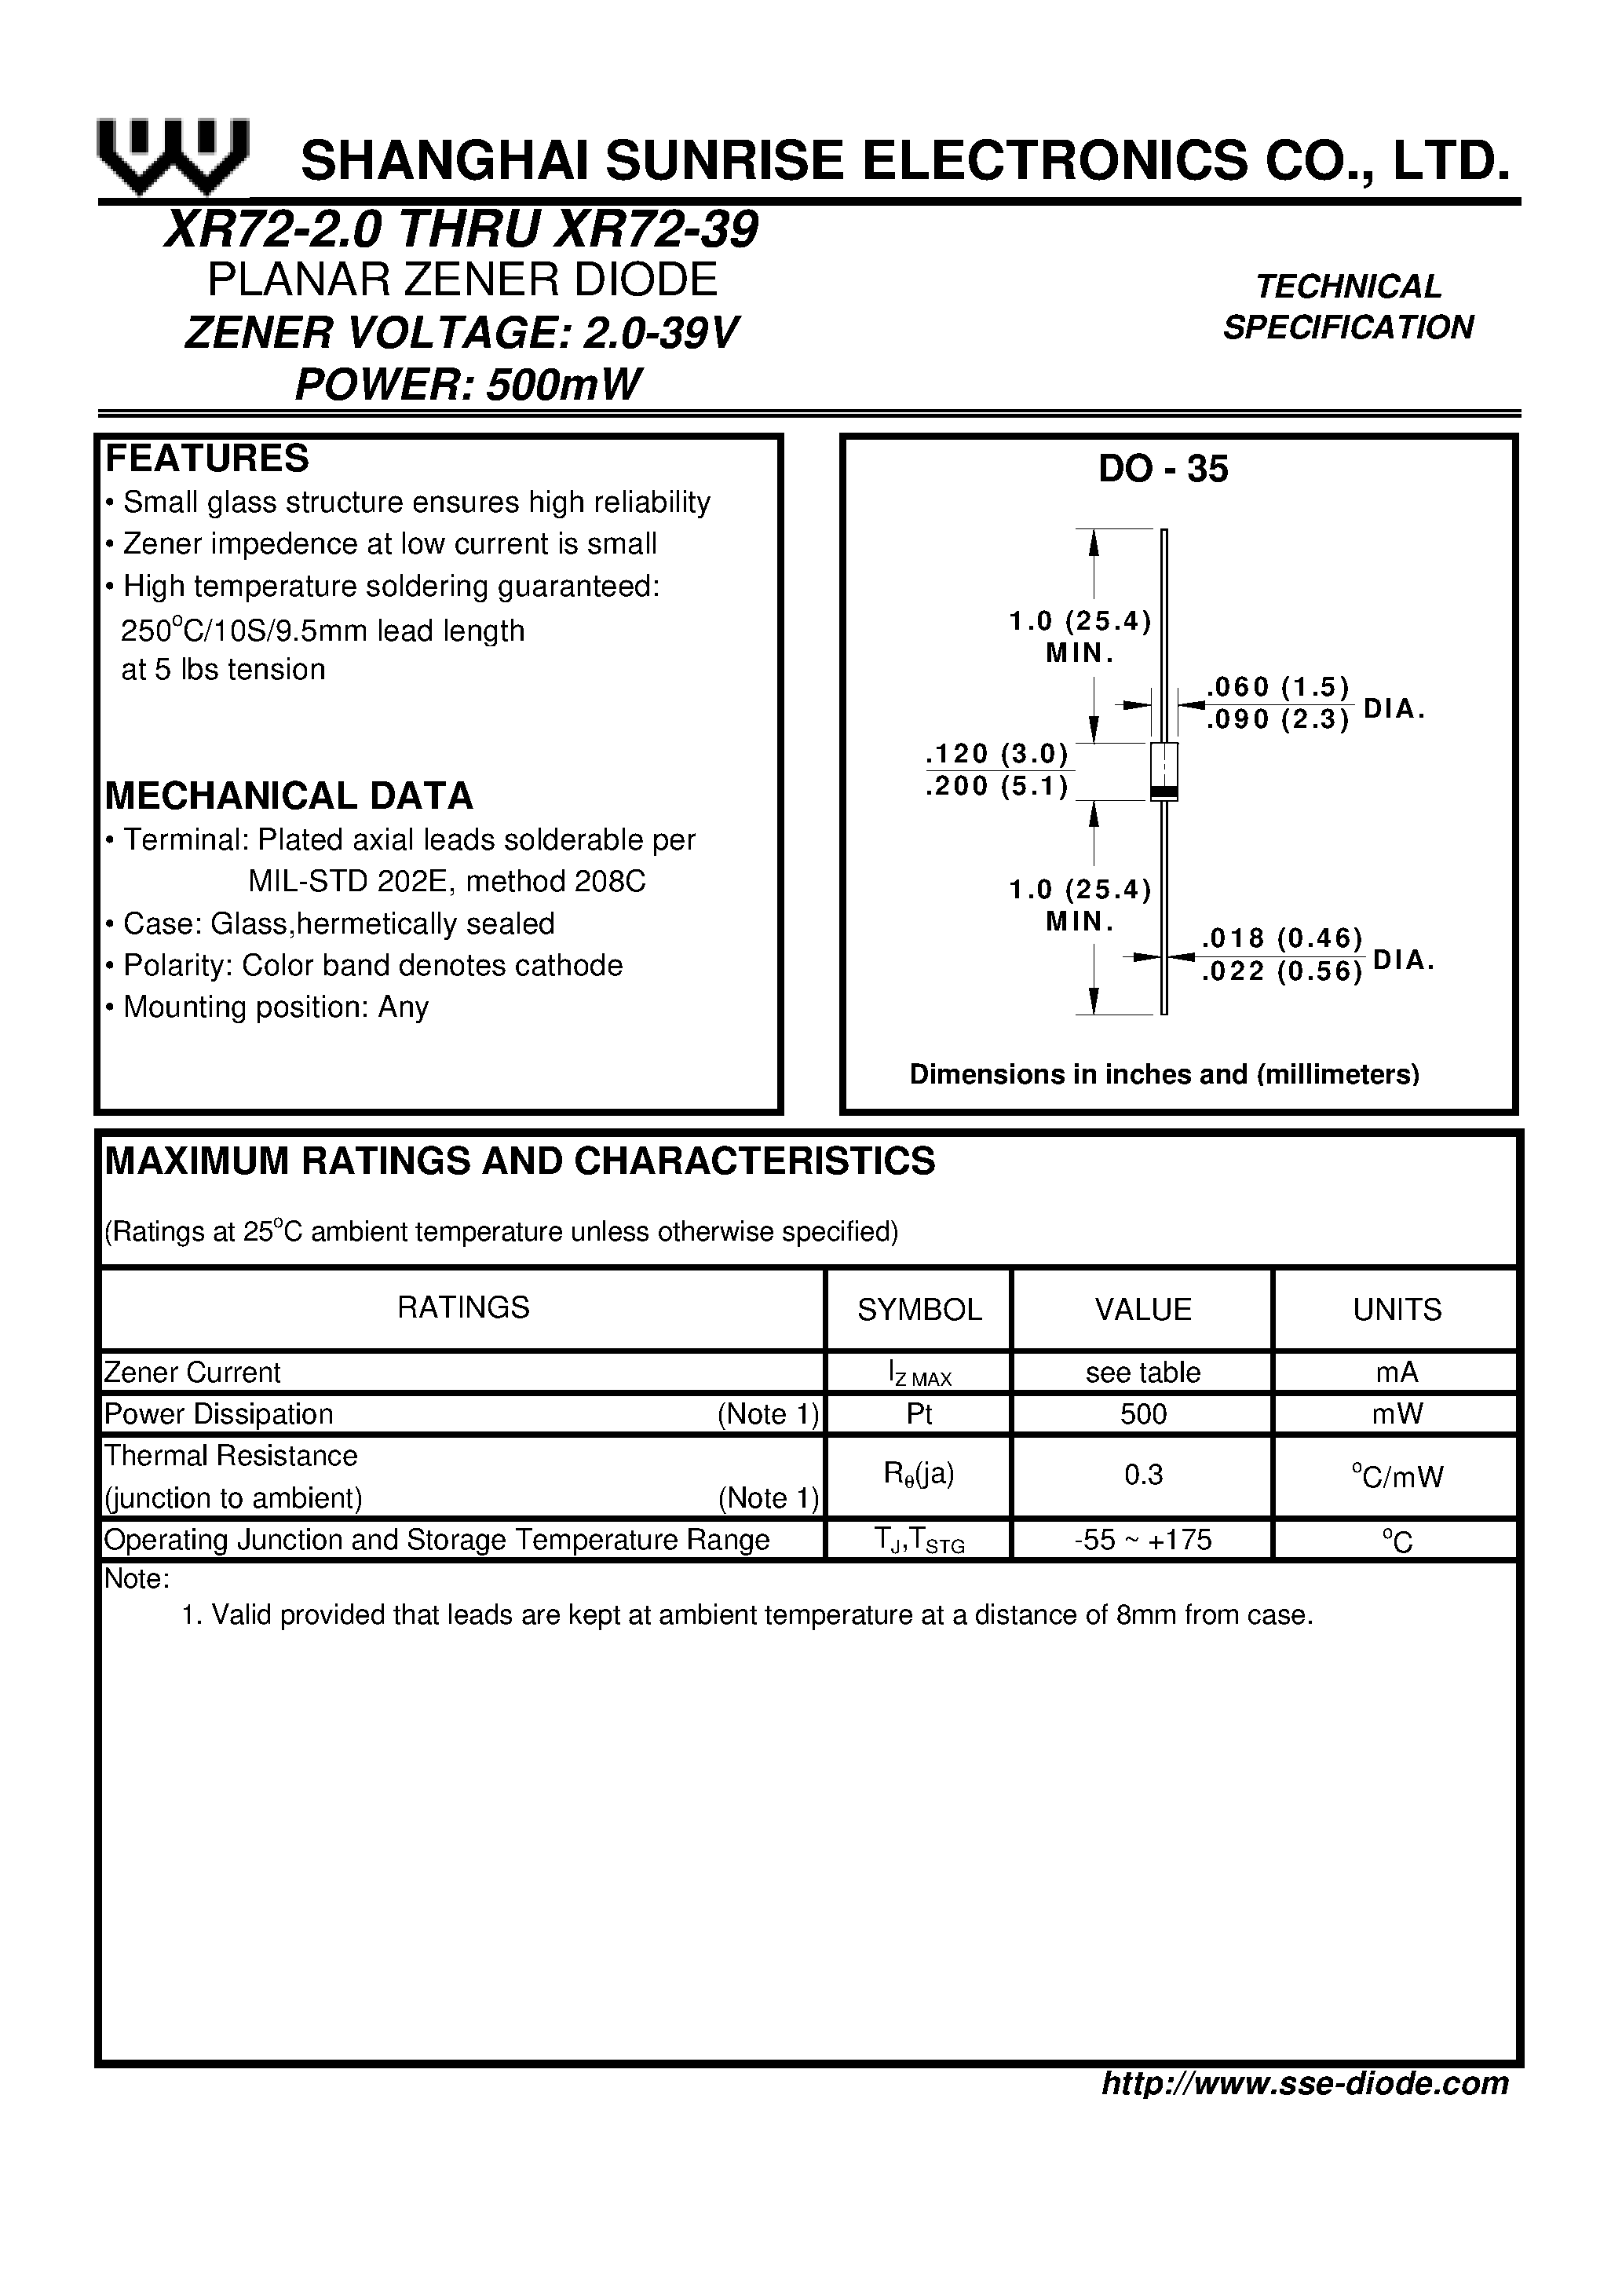 Datasheet XR72-9.1 - PLANAR ZENER DIODE page 1